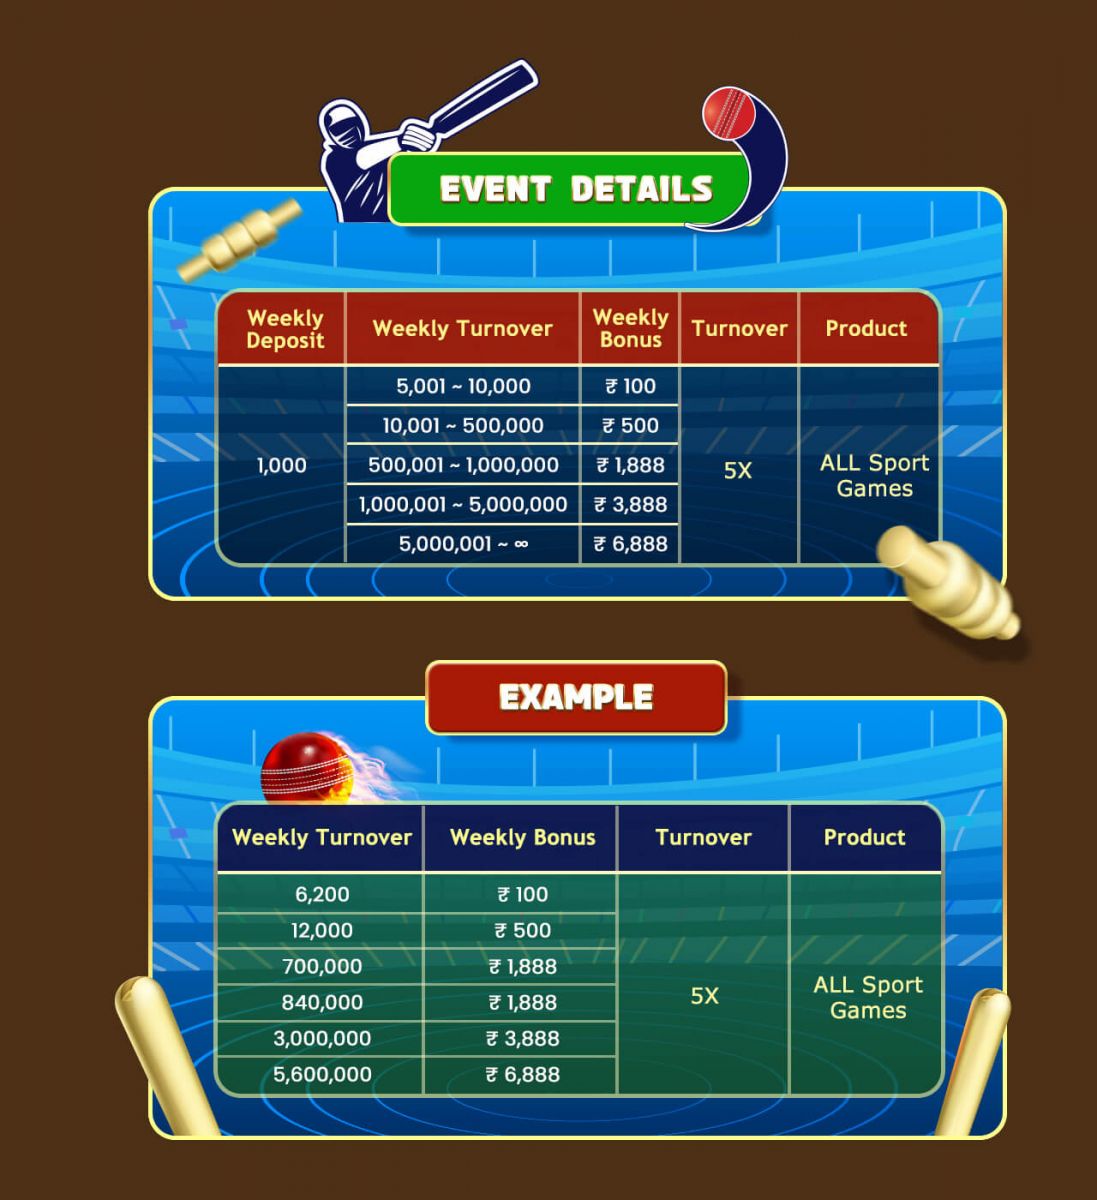 IPL EXTRAS Weekly Sports Deposit Betting Bonus ₹6,888